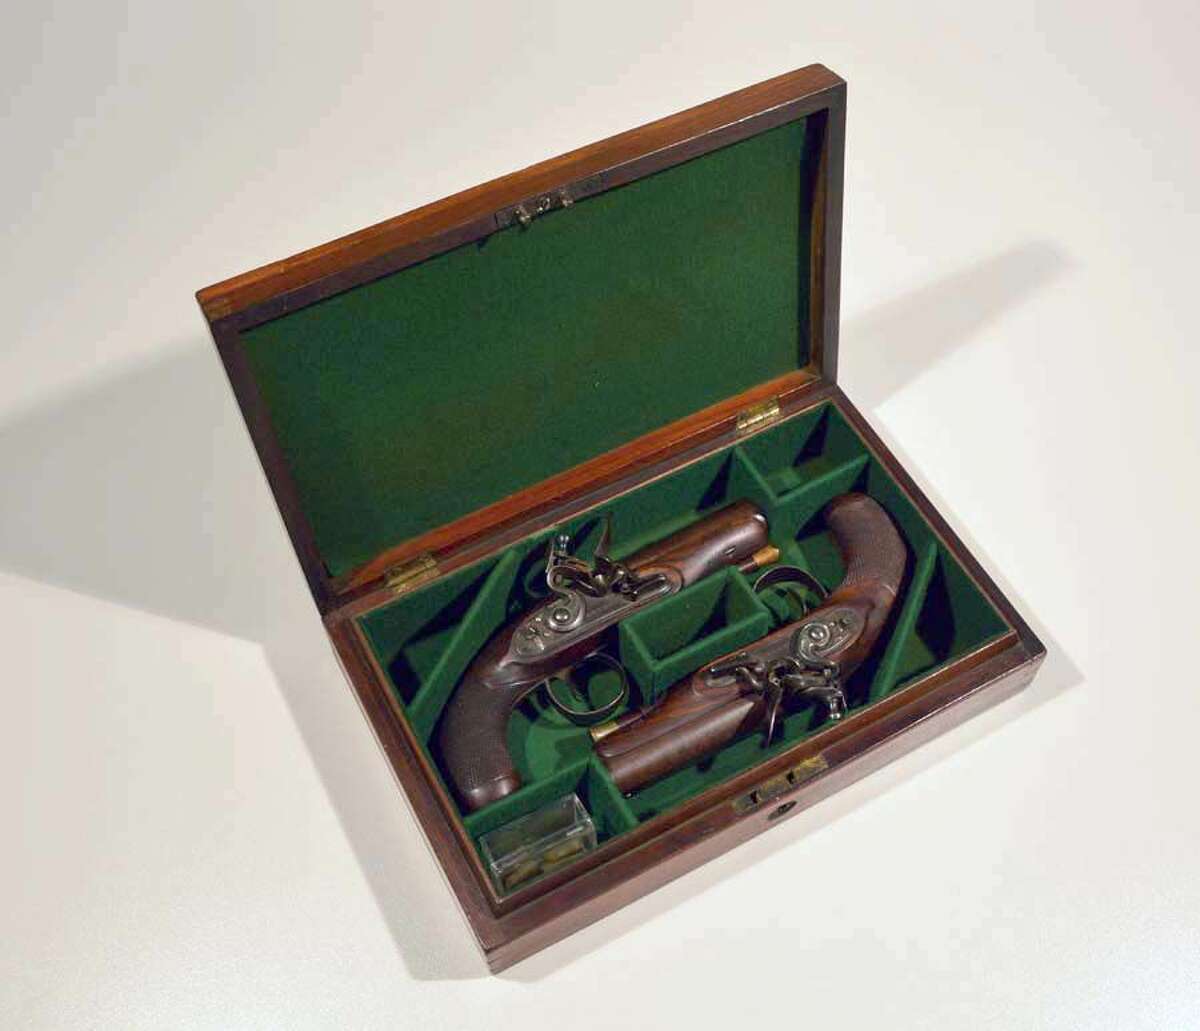 Dueling flintlock pistols, made by Samuel Brunn, England, 1795-1820, gift of Newton Brainard.